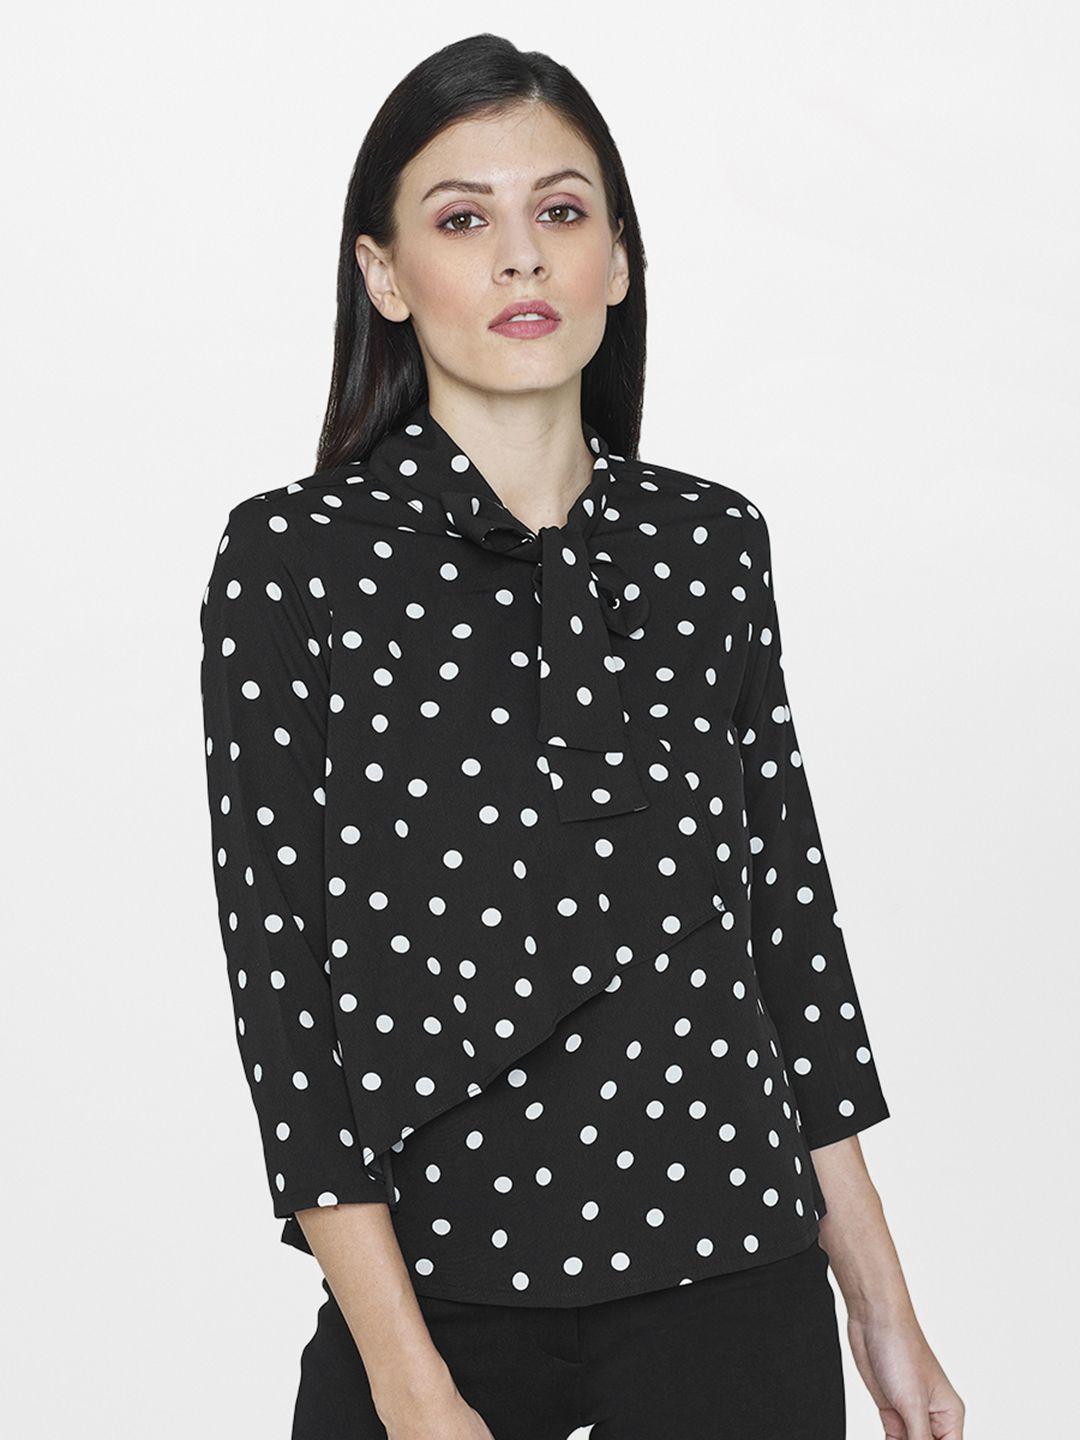 and-women-black-&-white-polka-printed-top